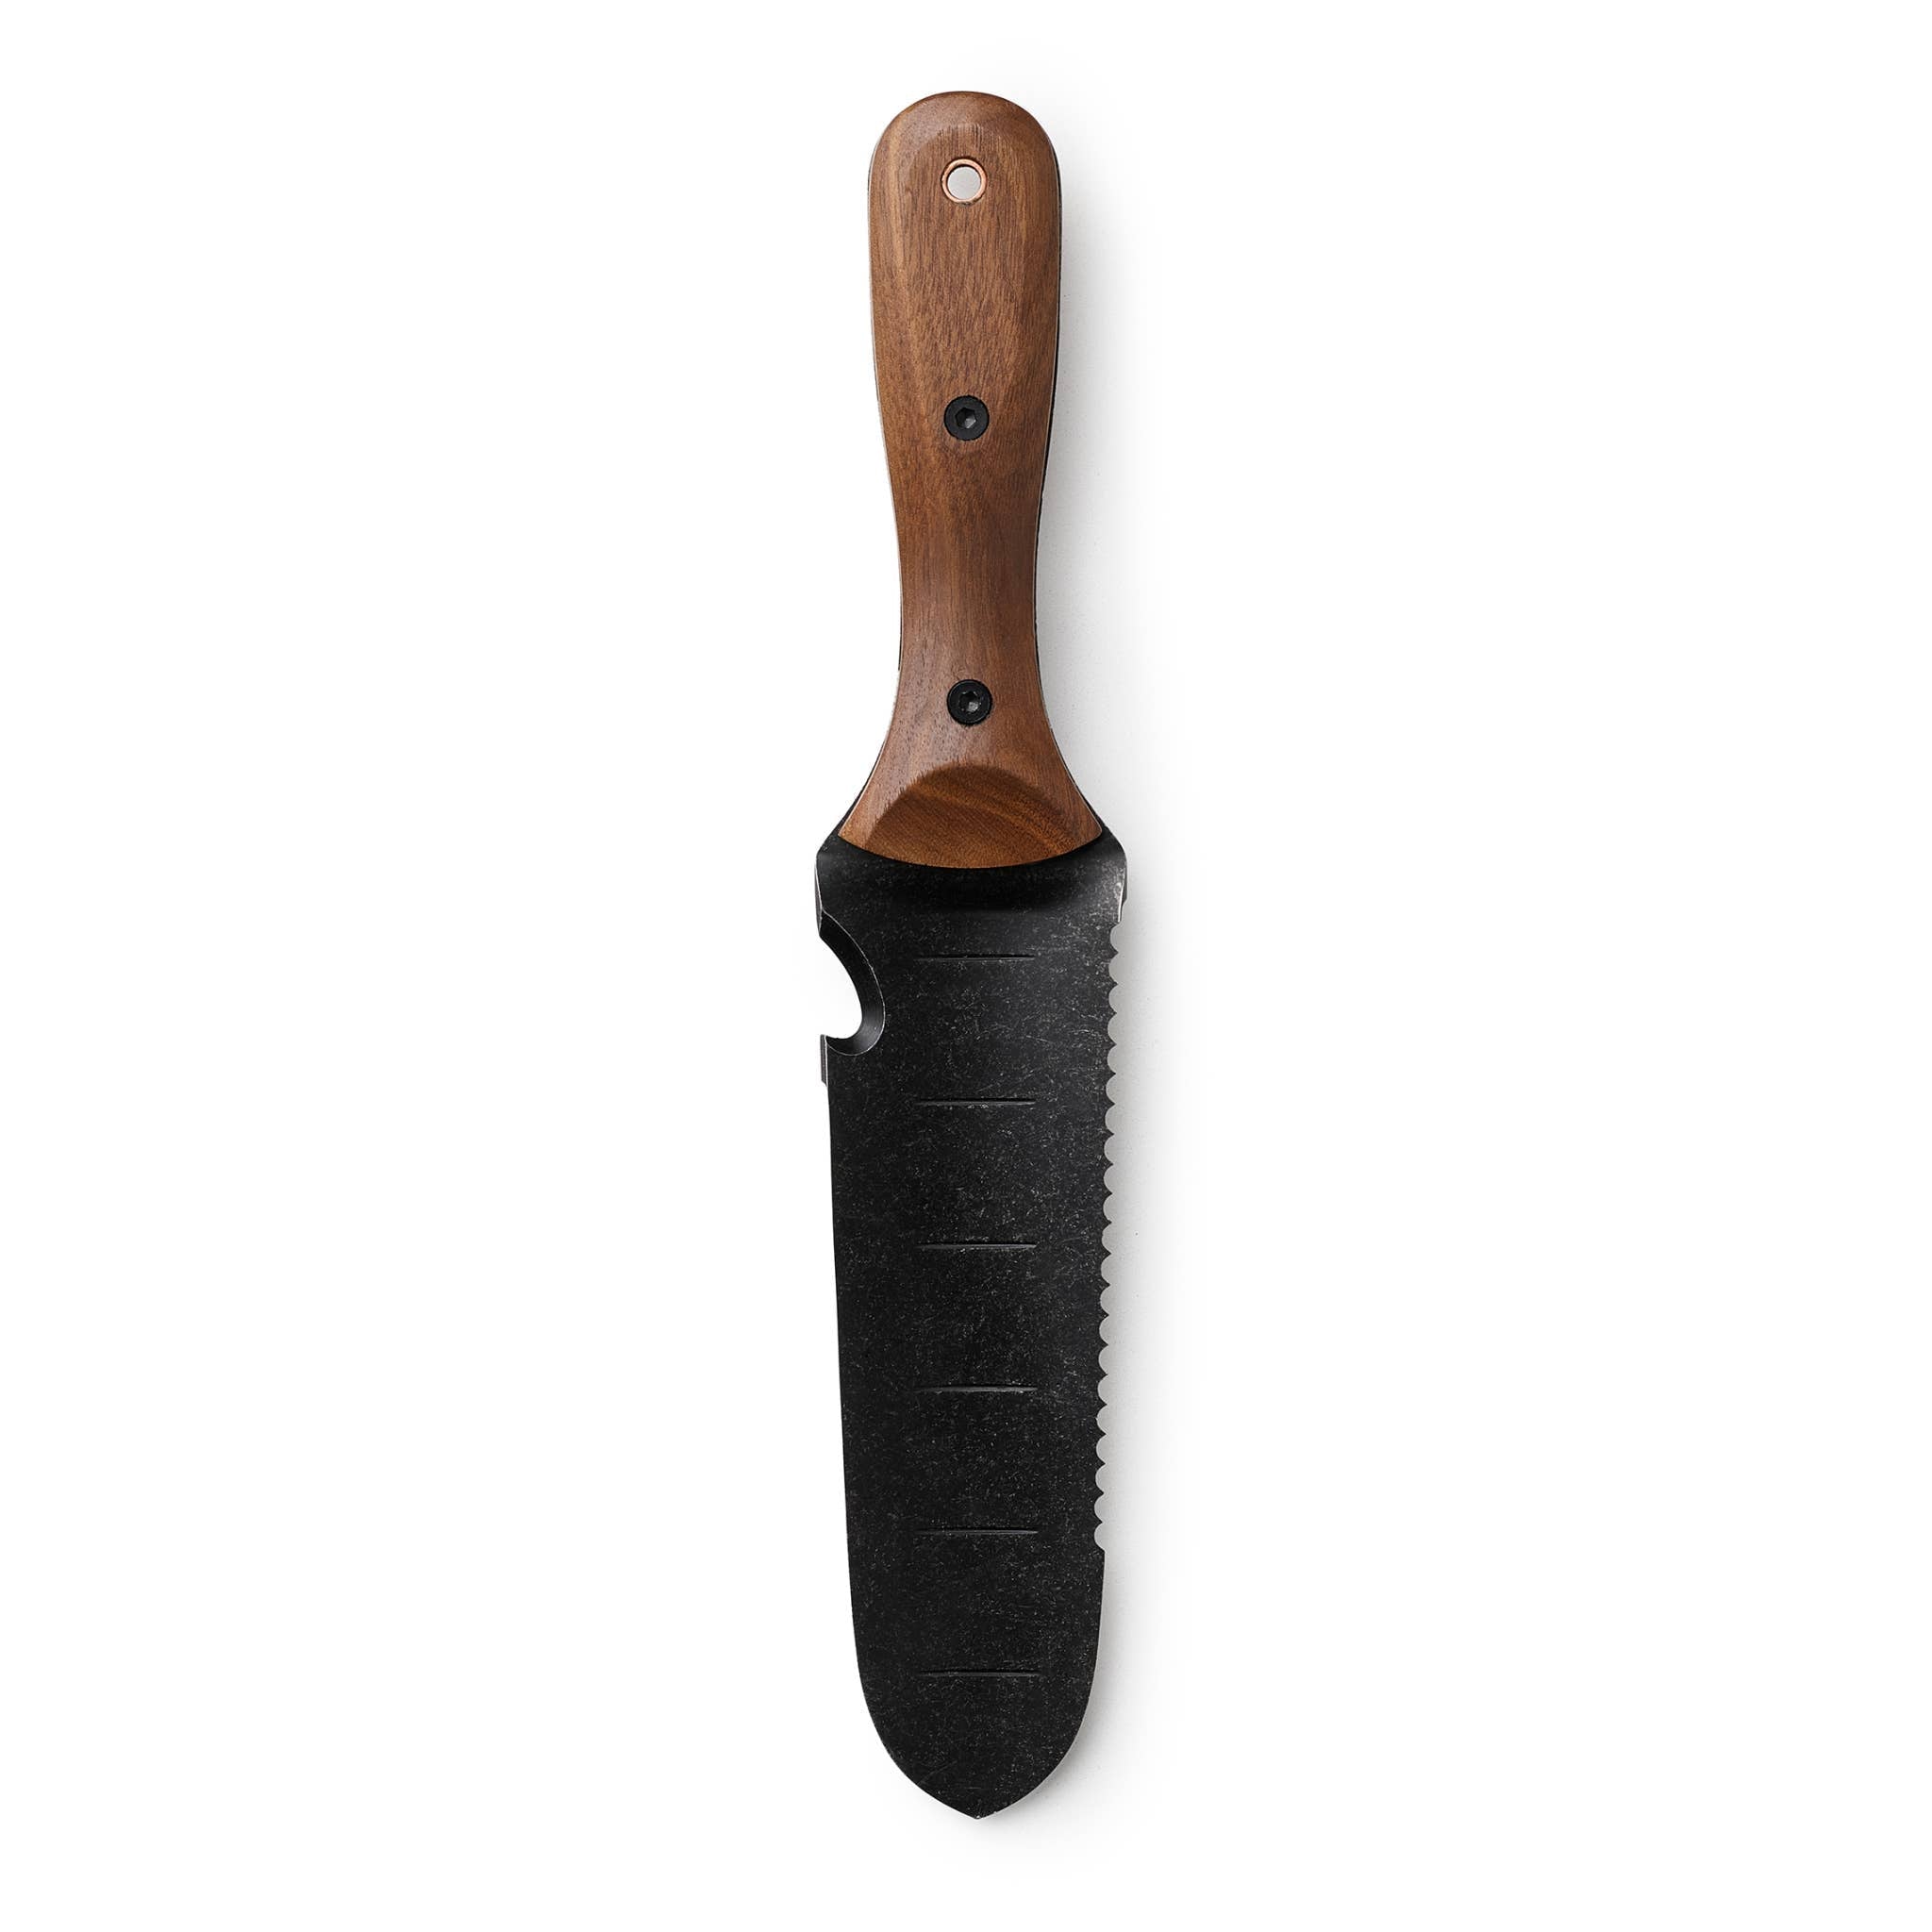 Barebones | Hori Hori Classic Knife Tool, Knives, Barebones, Defiance Outdoor Gear Co.